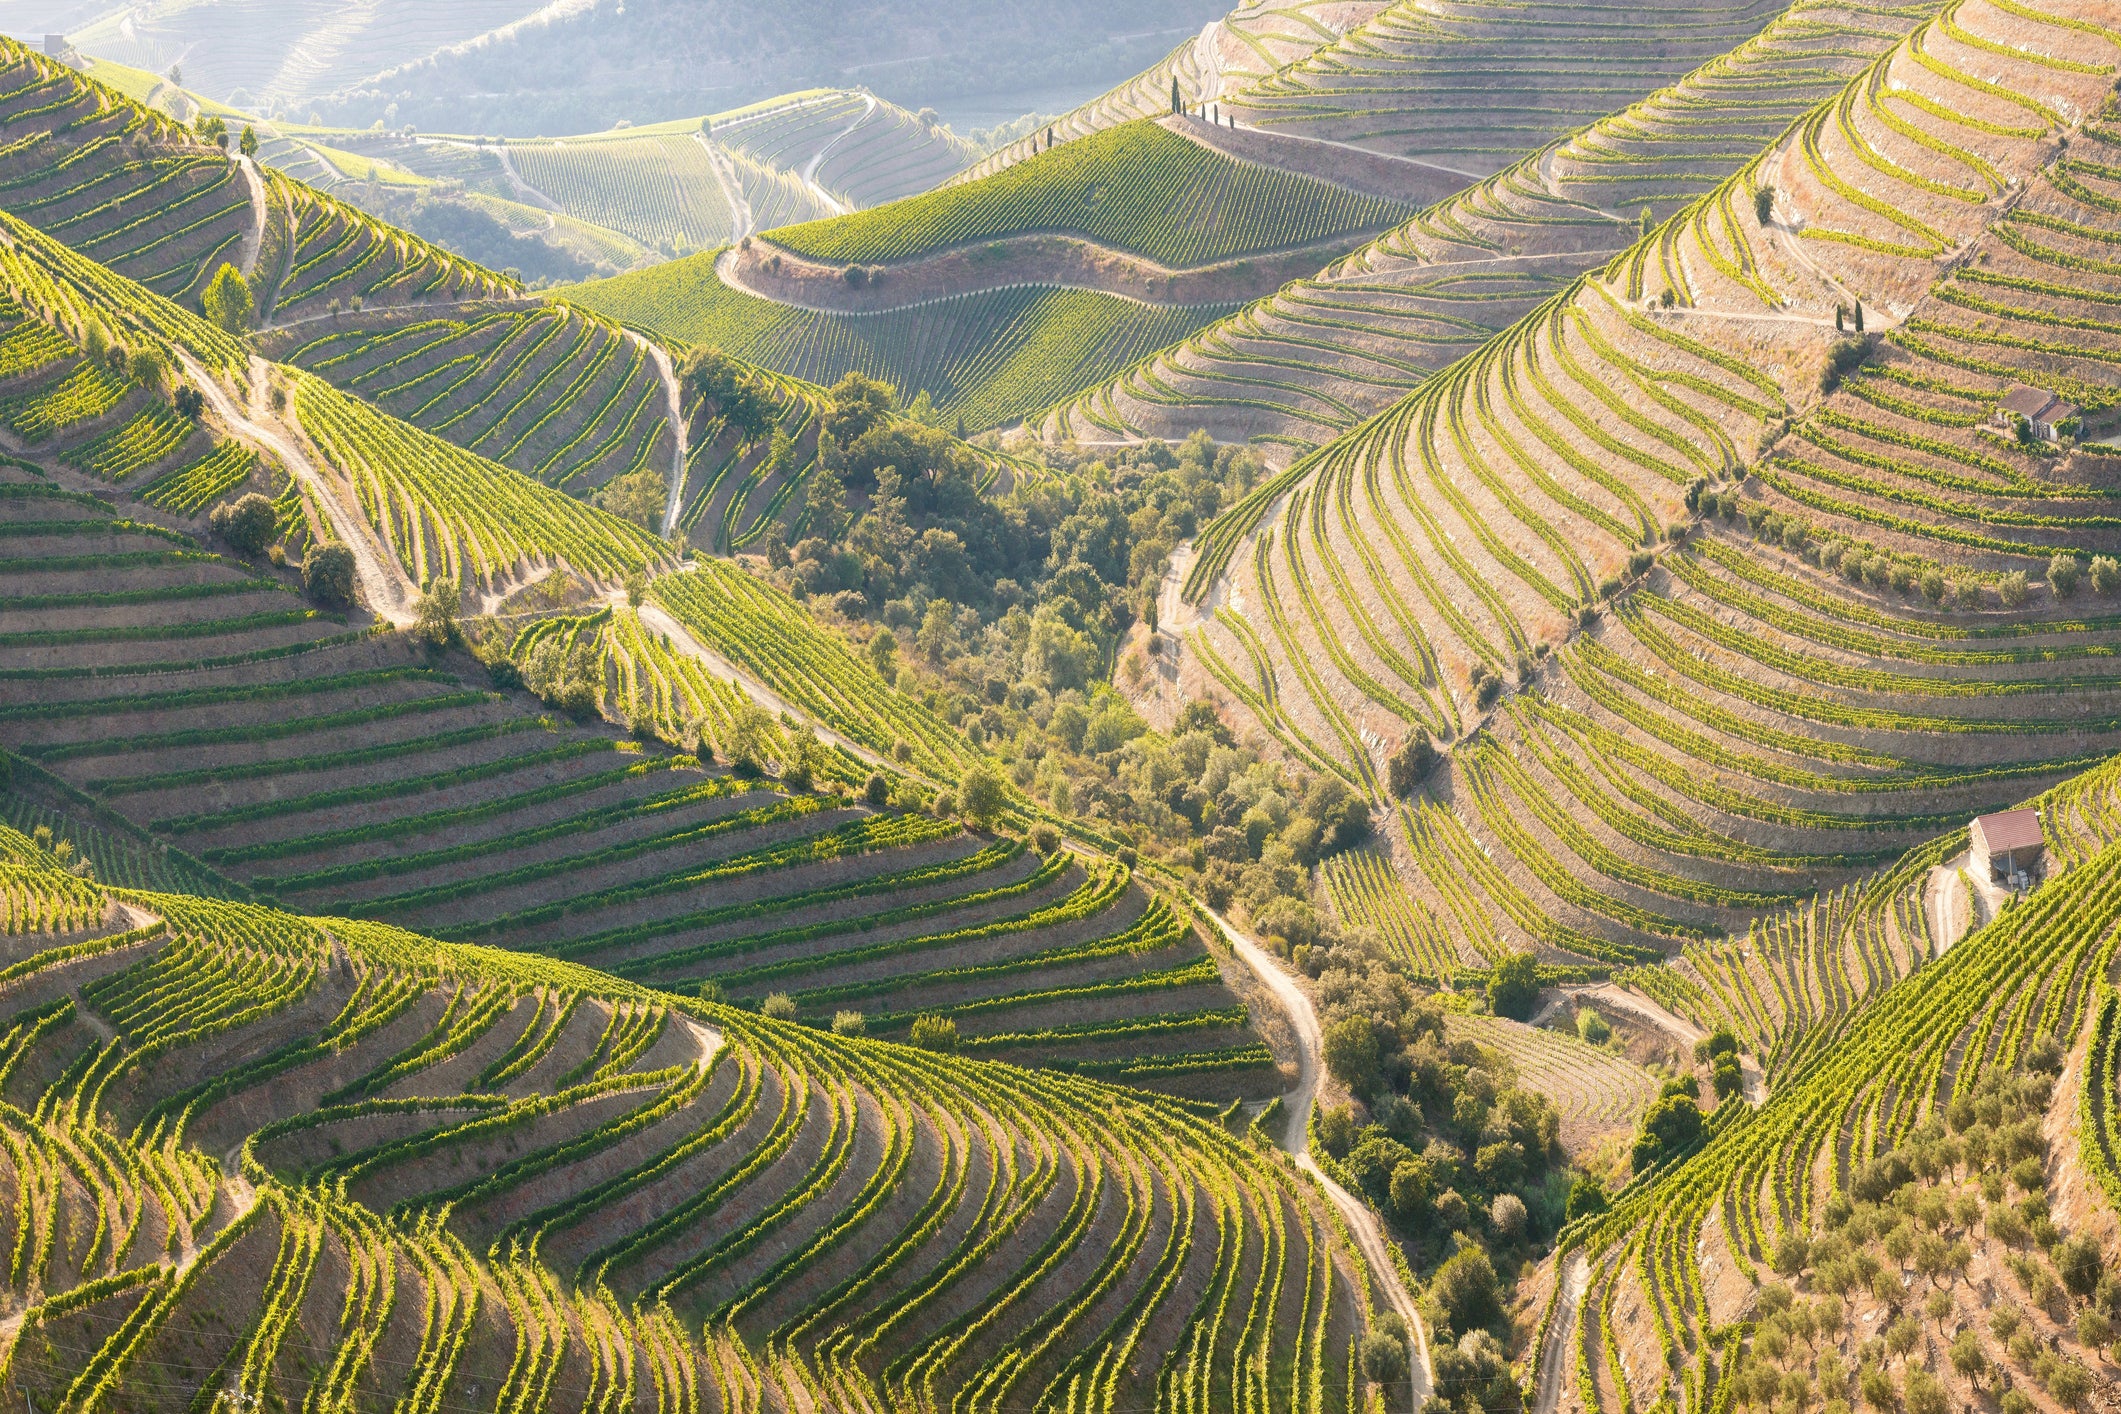 Over 80 vineyards dot the enchanting Douro Valley near Porto